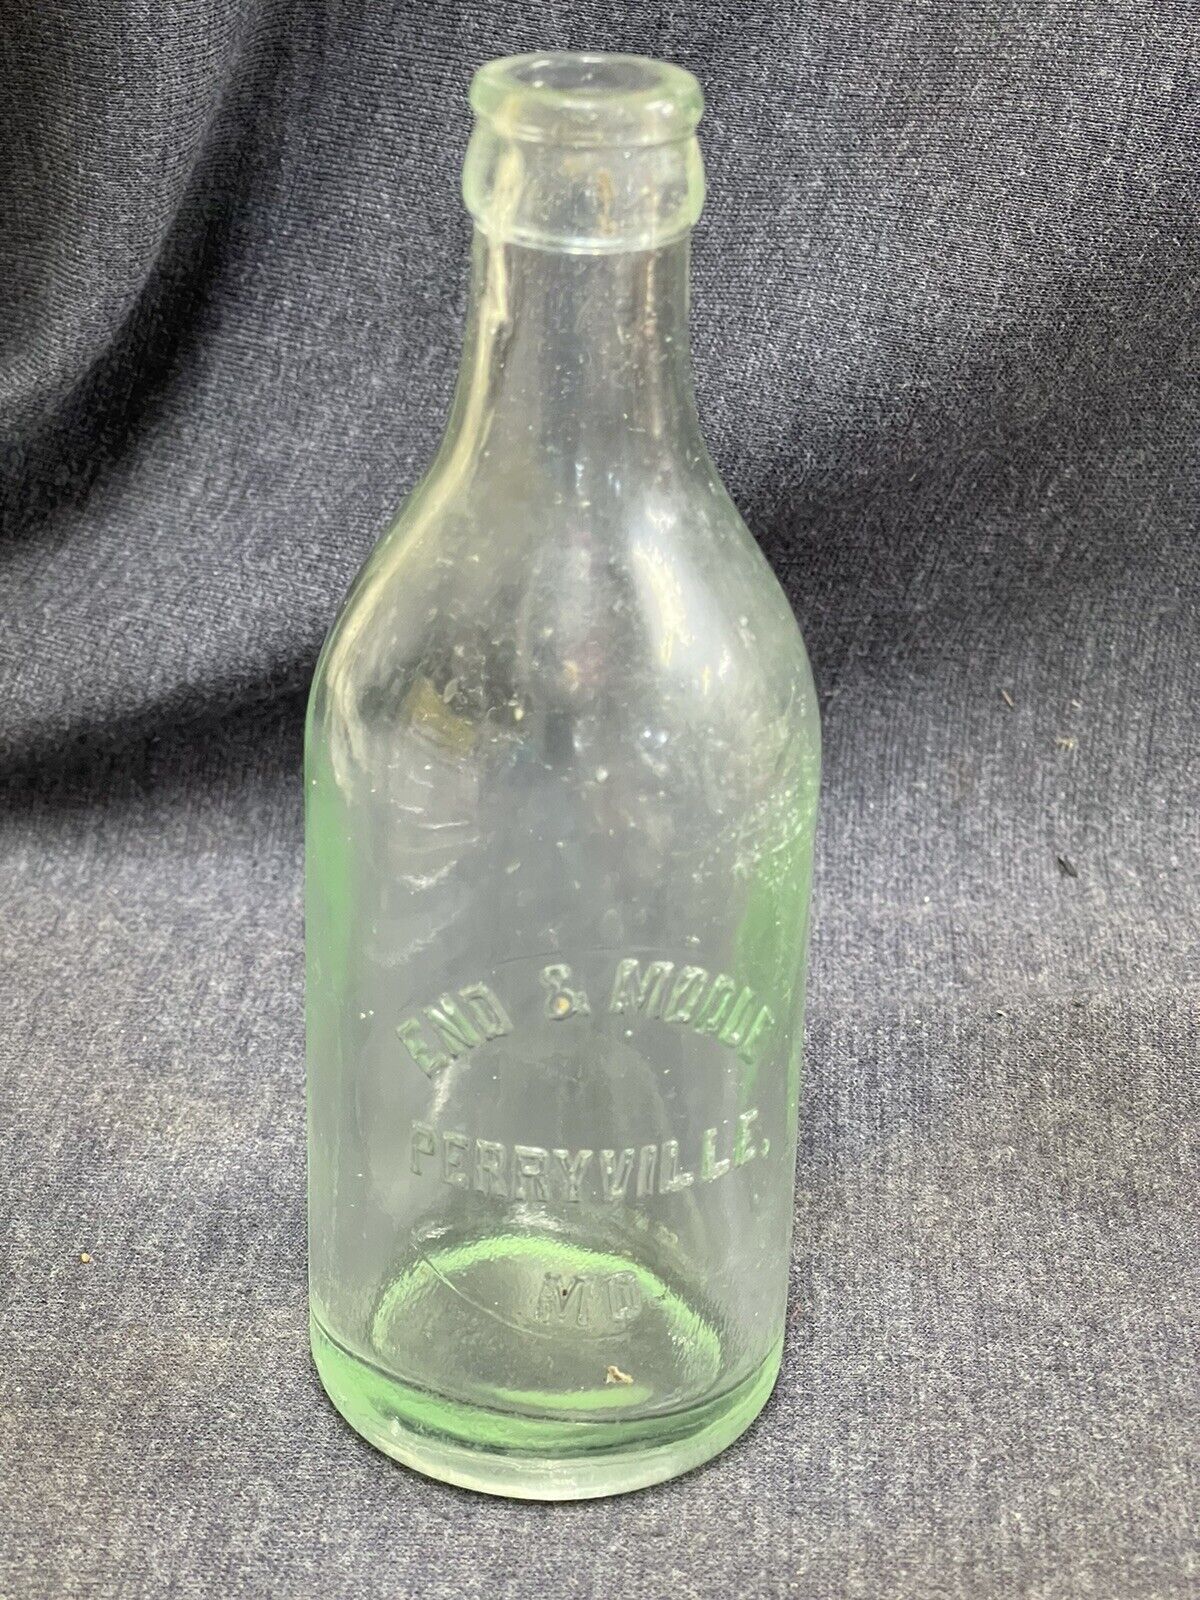 Very Nice Perryville Missouri Aqua/Green Soda Bottle Rare End & Modde Early 1900